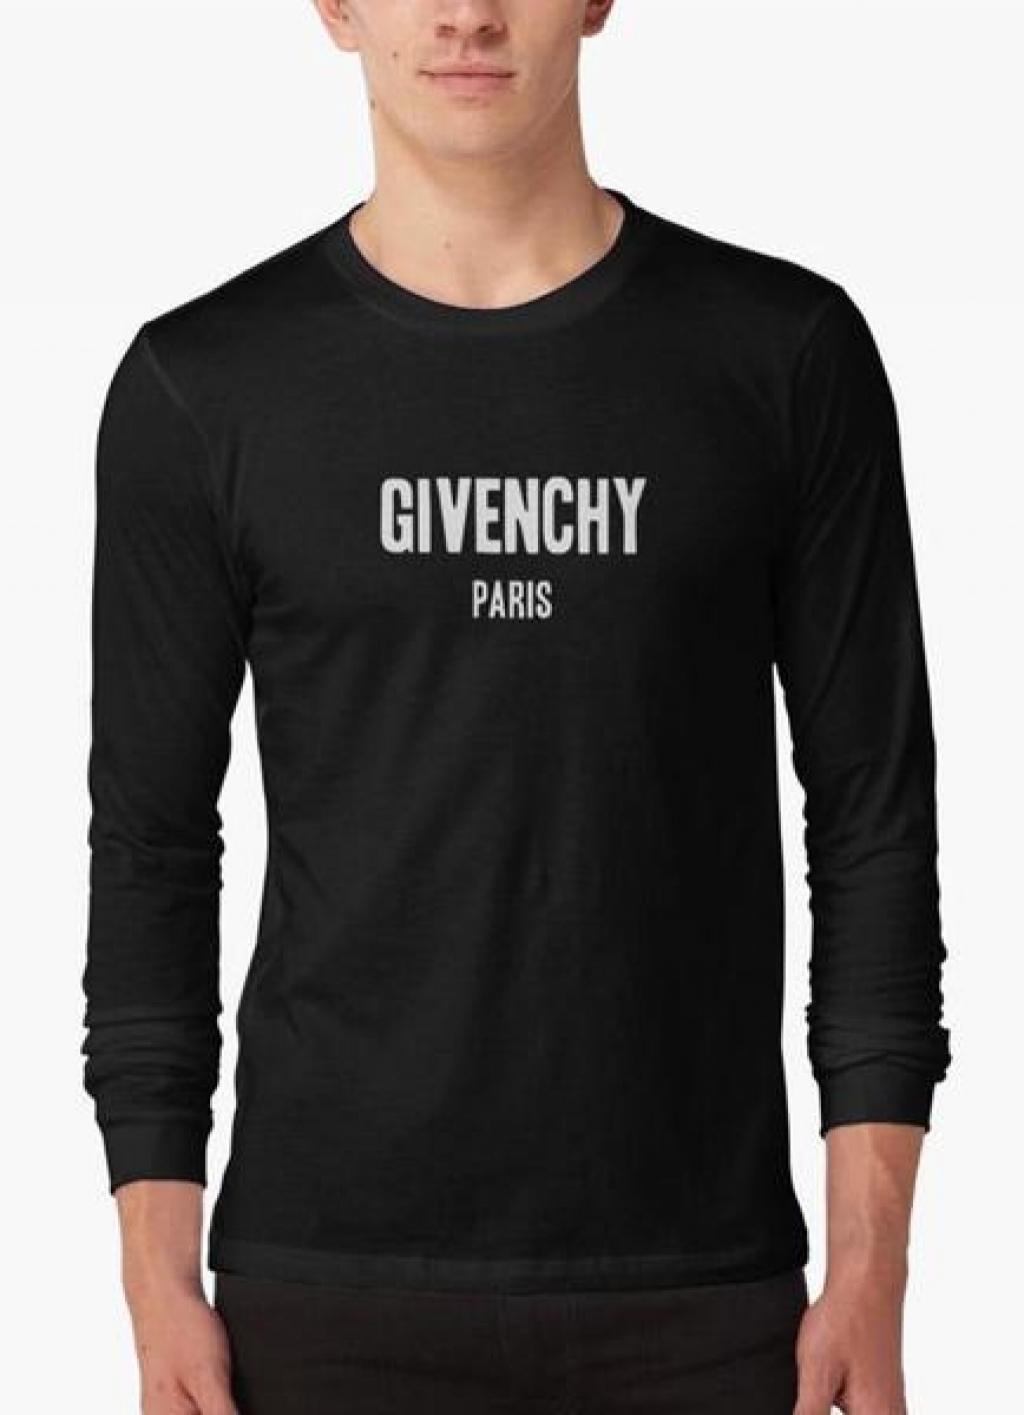 givenchy shirt price